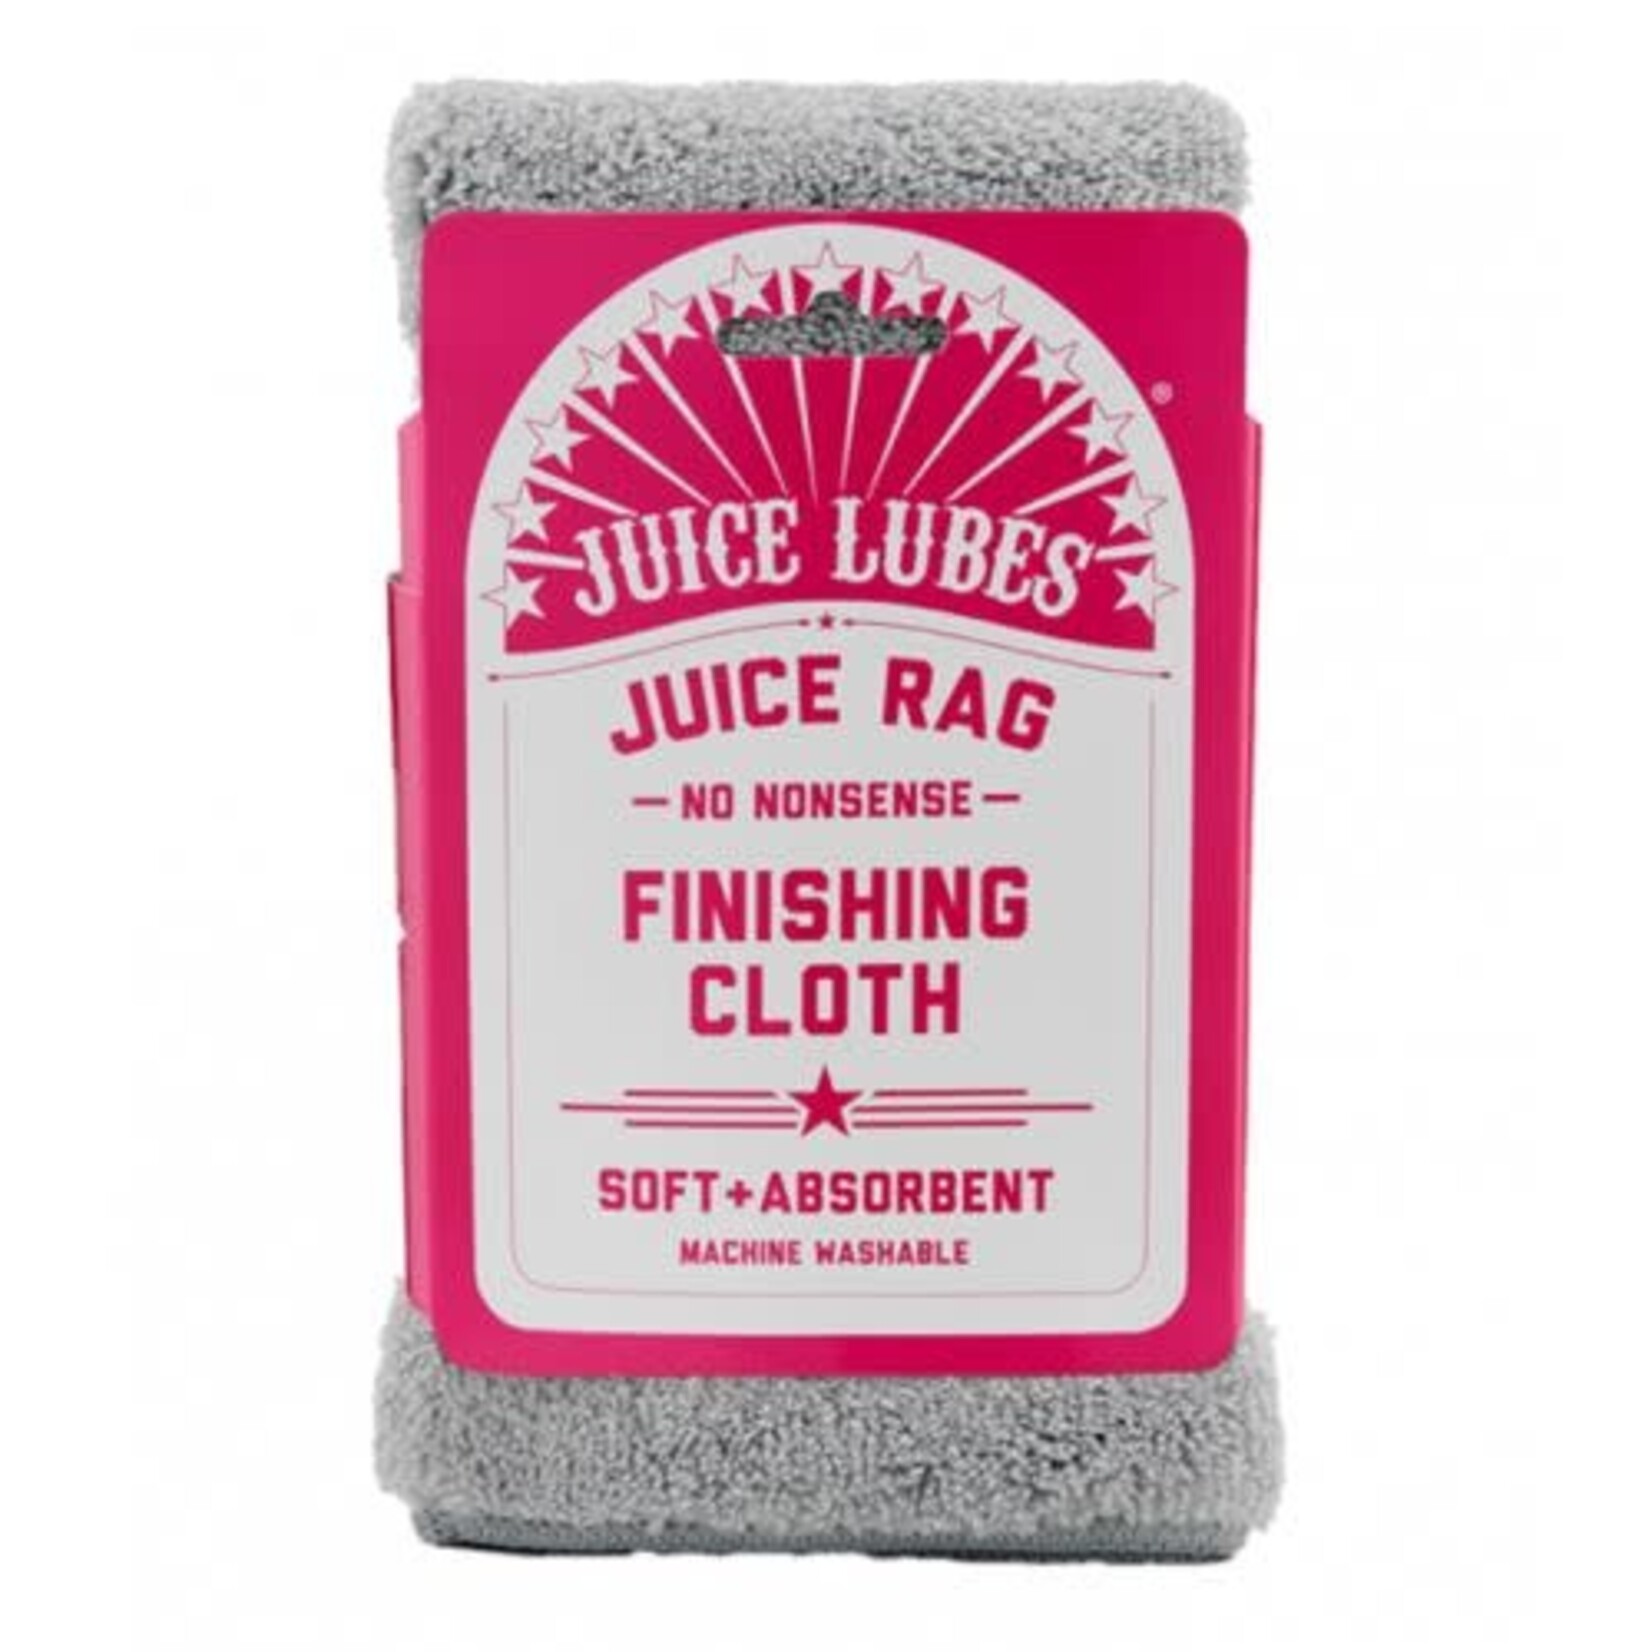 Juice Lubes JUICE RAG FINISHING CLOTH